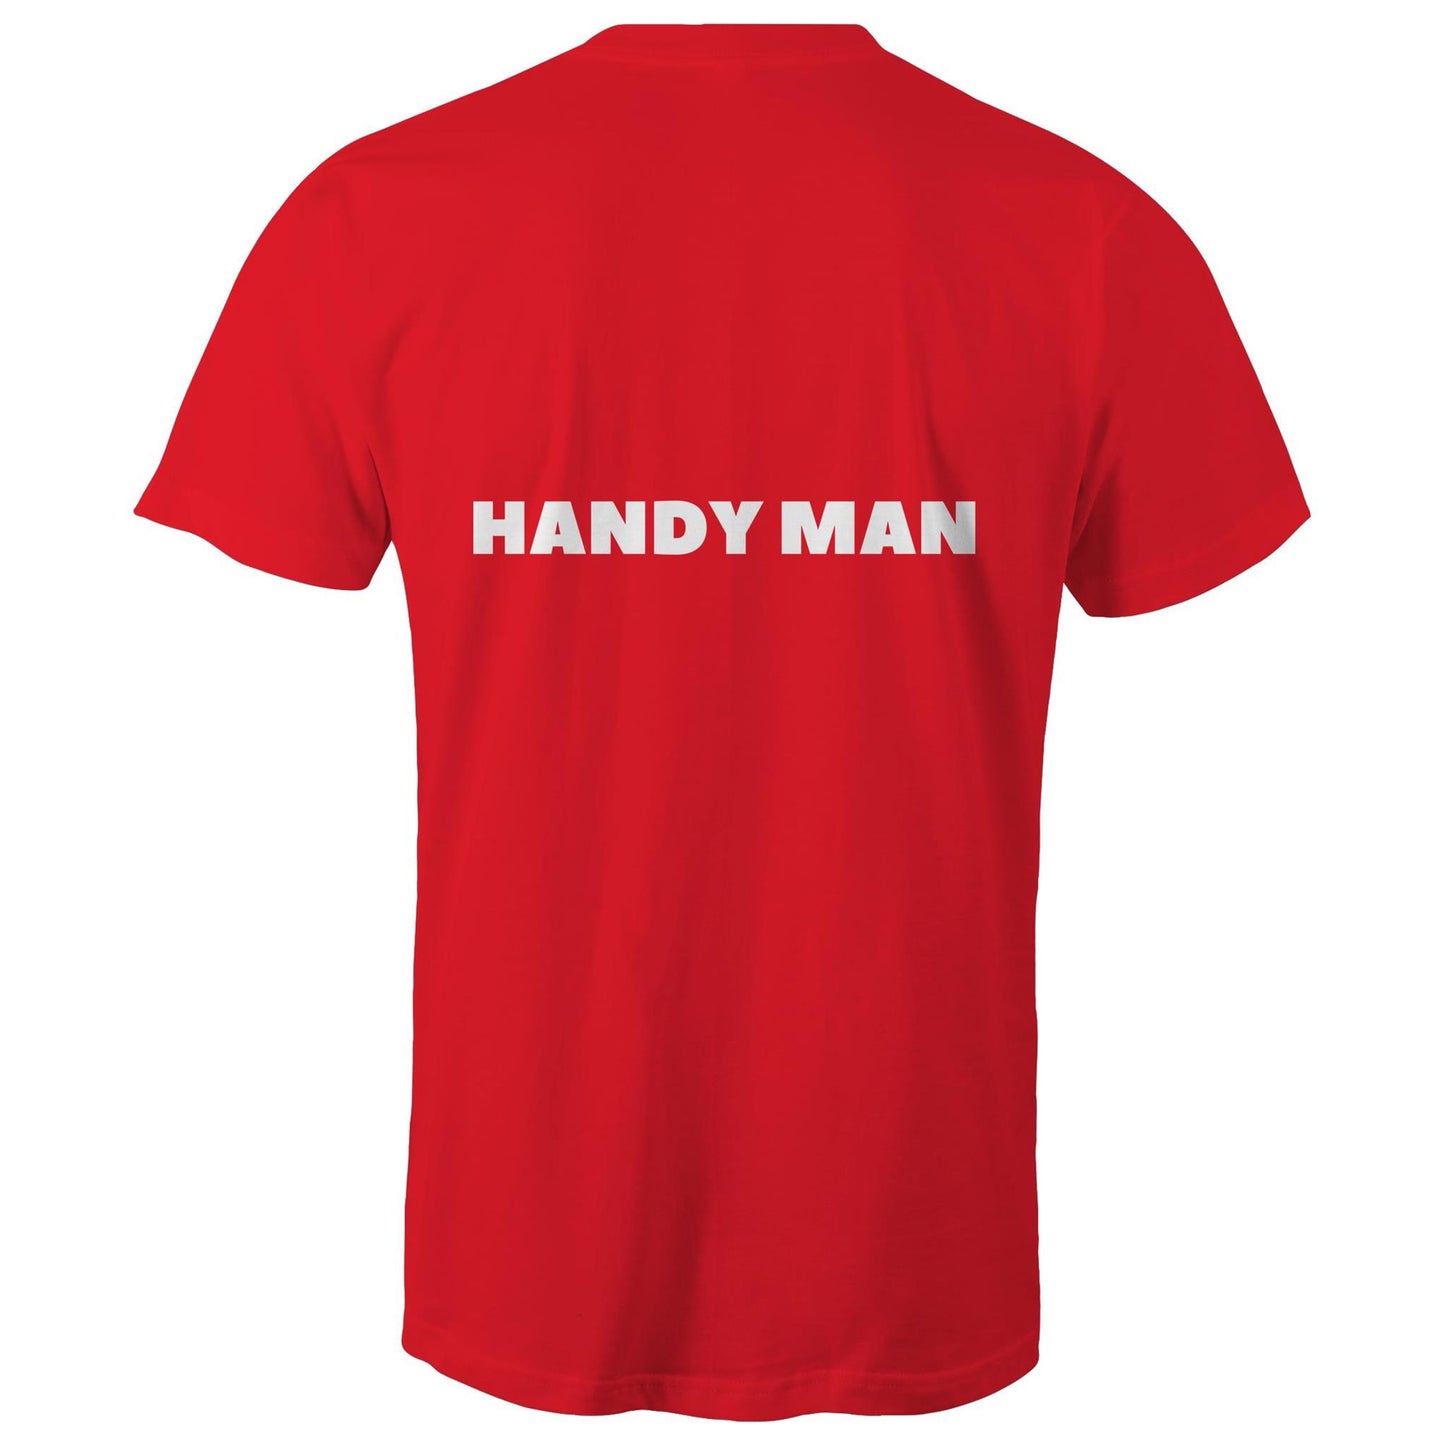 HANDY MAN - Mens T-Shirt